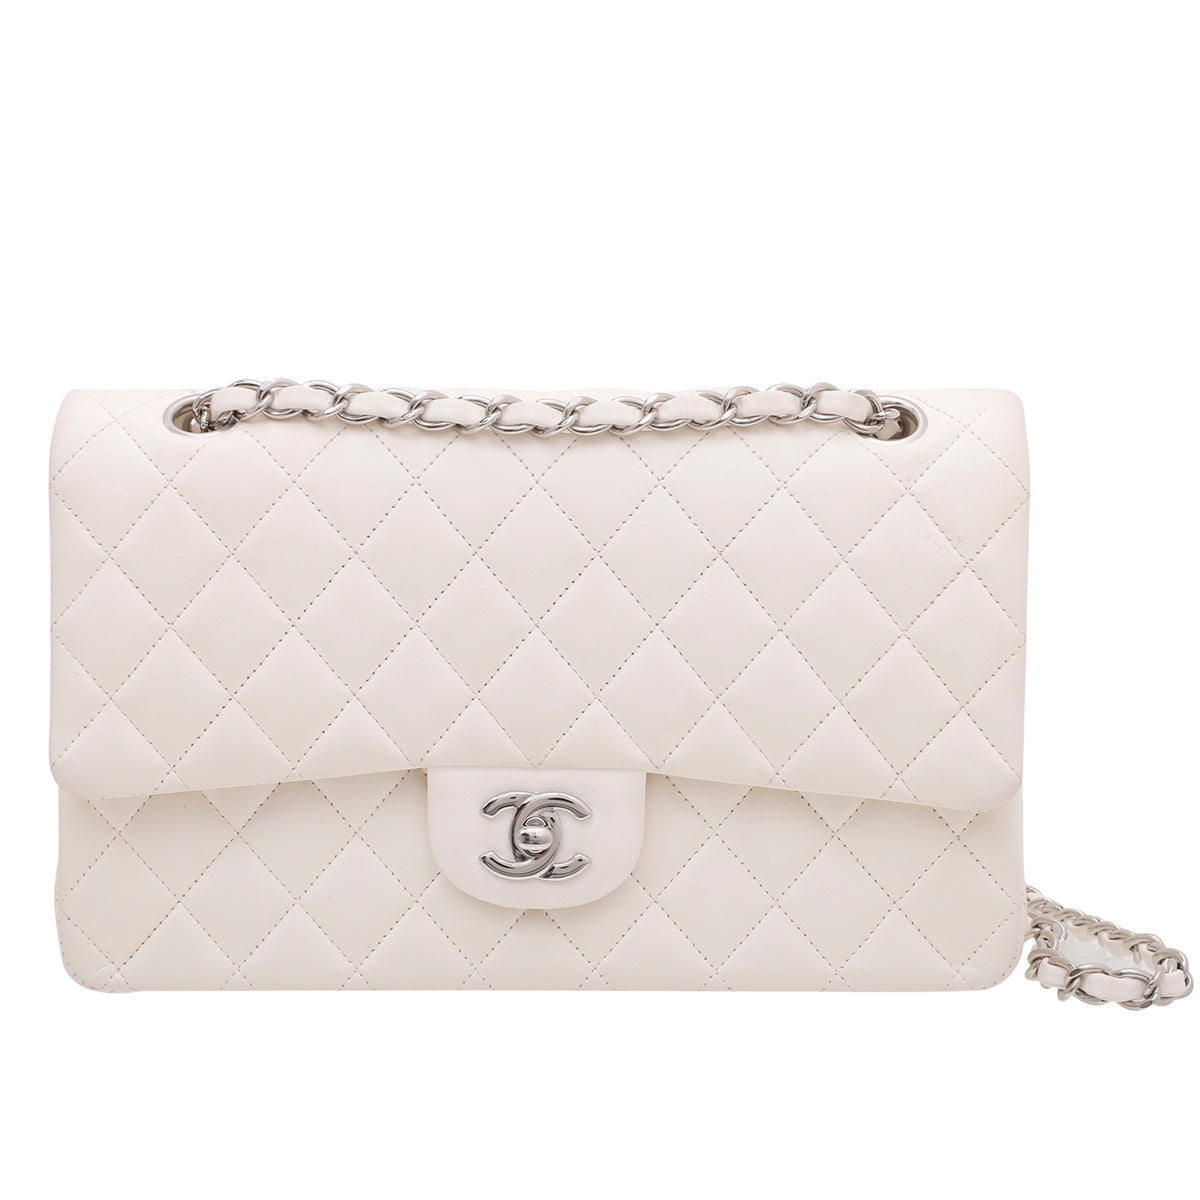 Chanel White Classic CC Double Flap Medium Bag